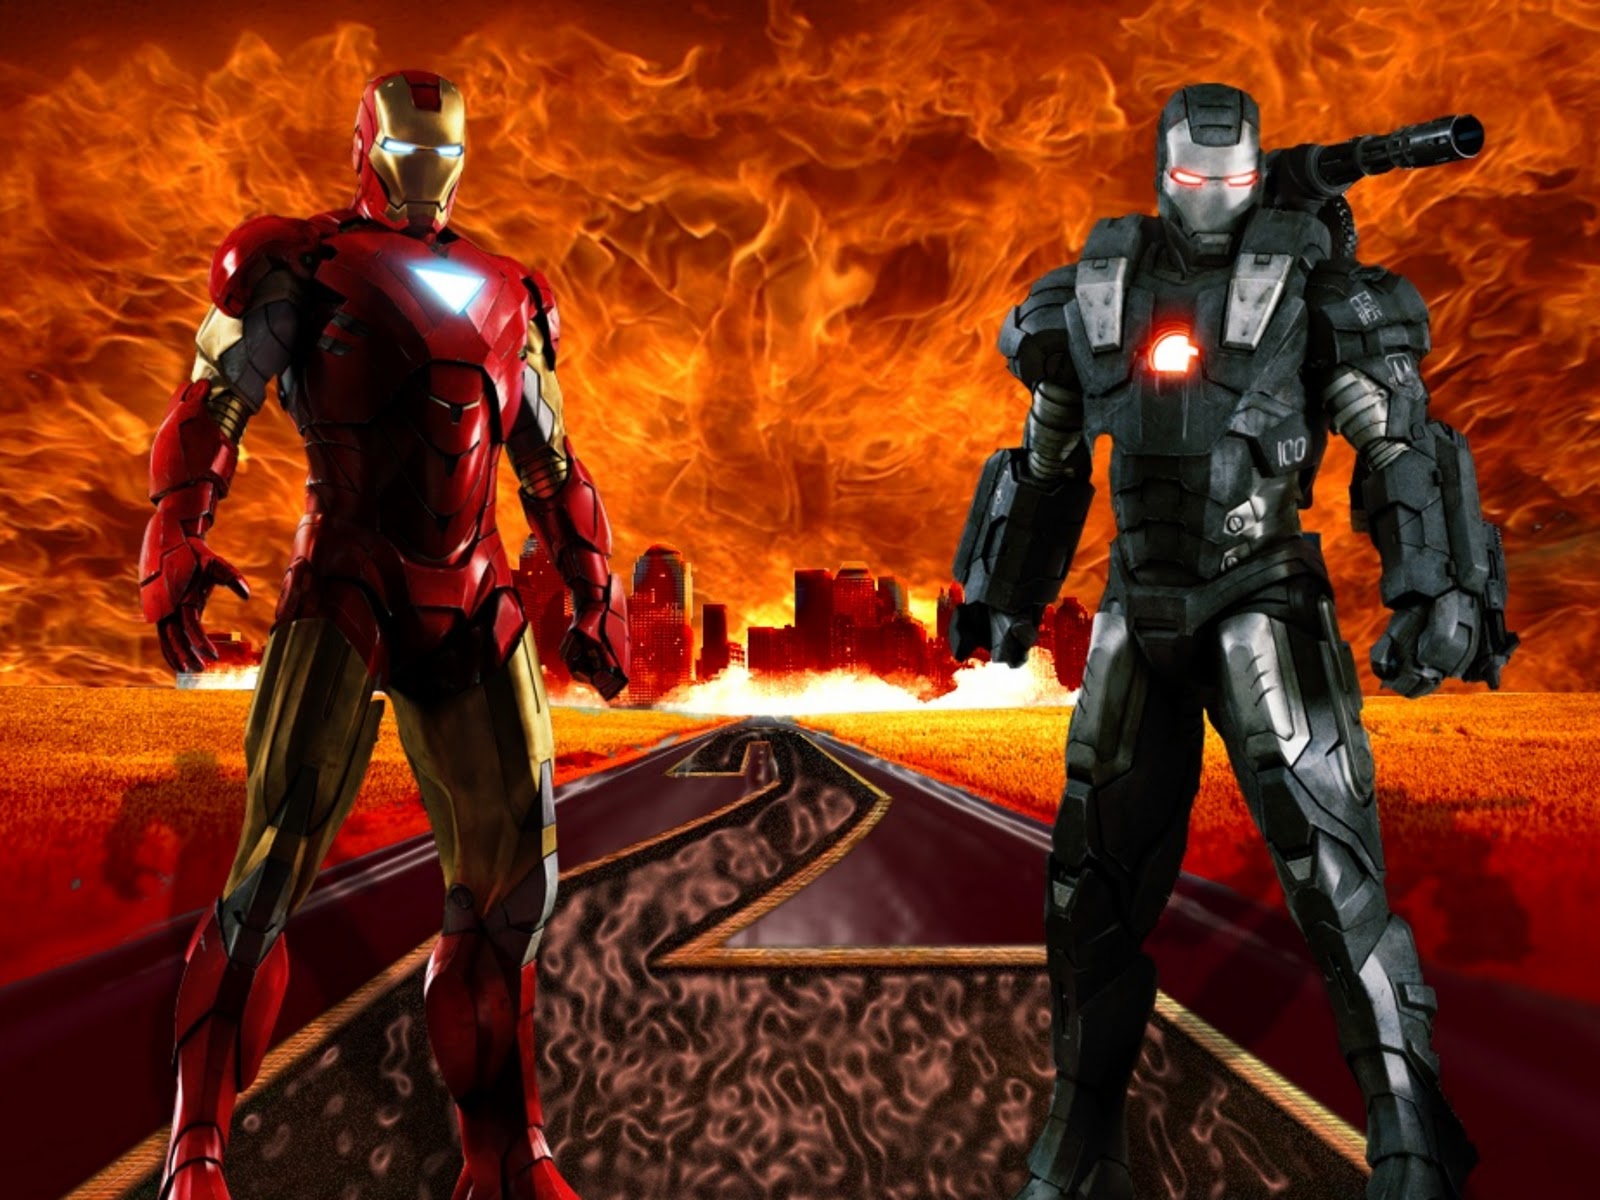 Iron Man movie wallpaper